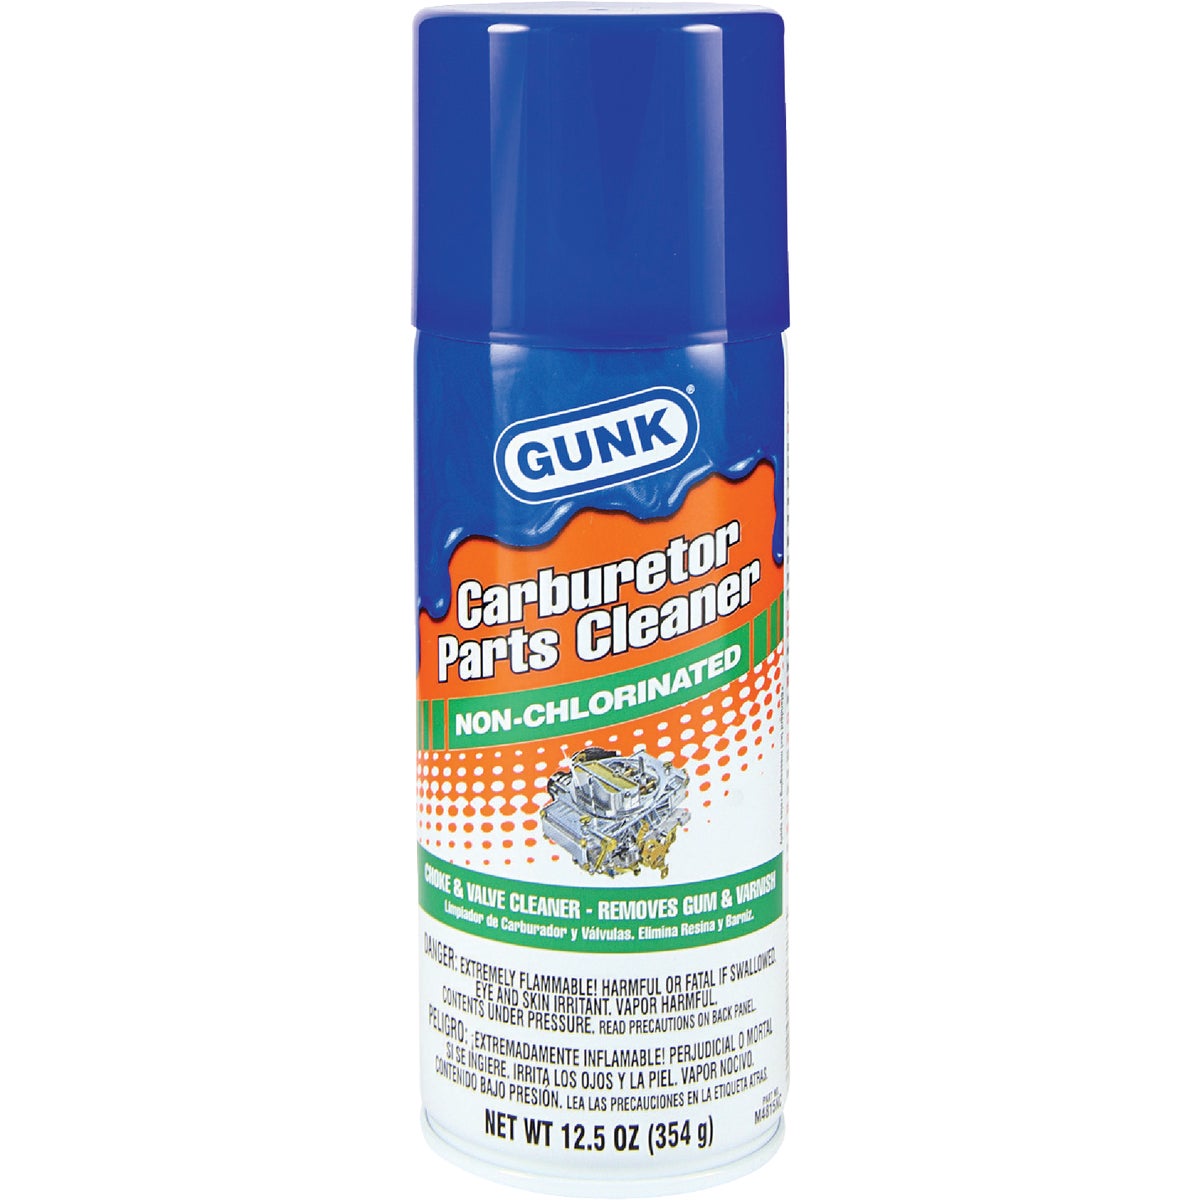 Item 577833, Gunk nonchlorinated carb medic. Removes gum and varnish.